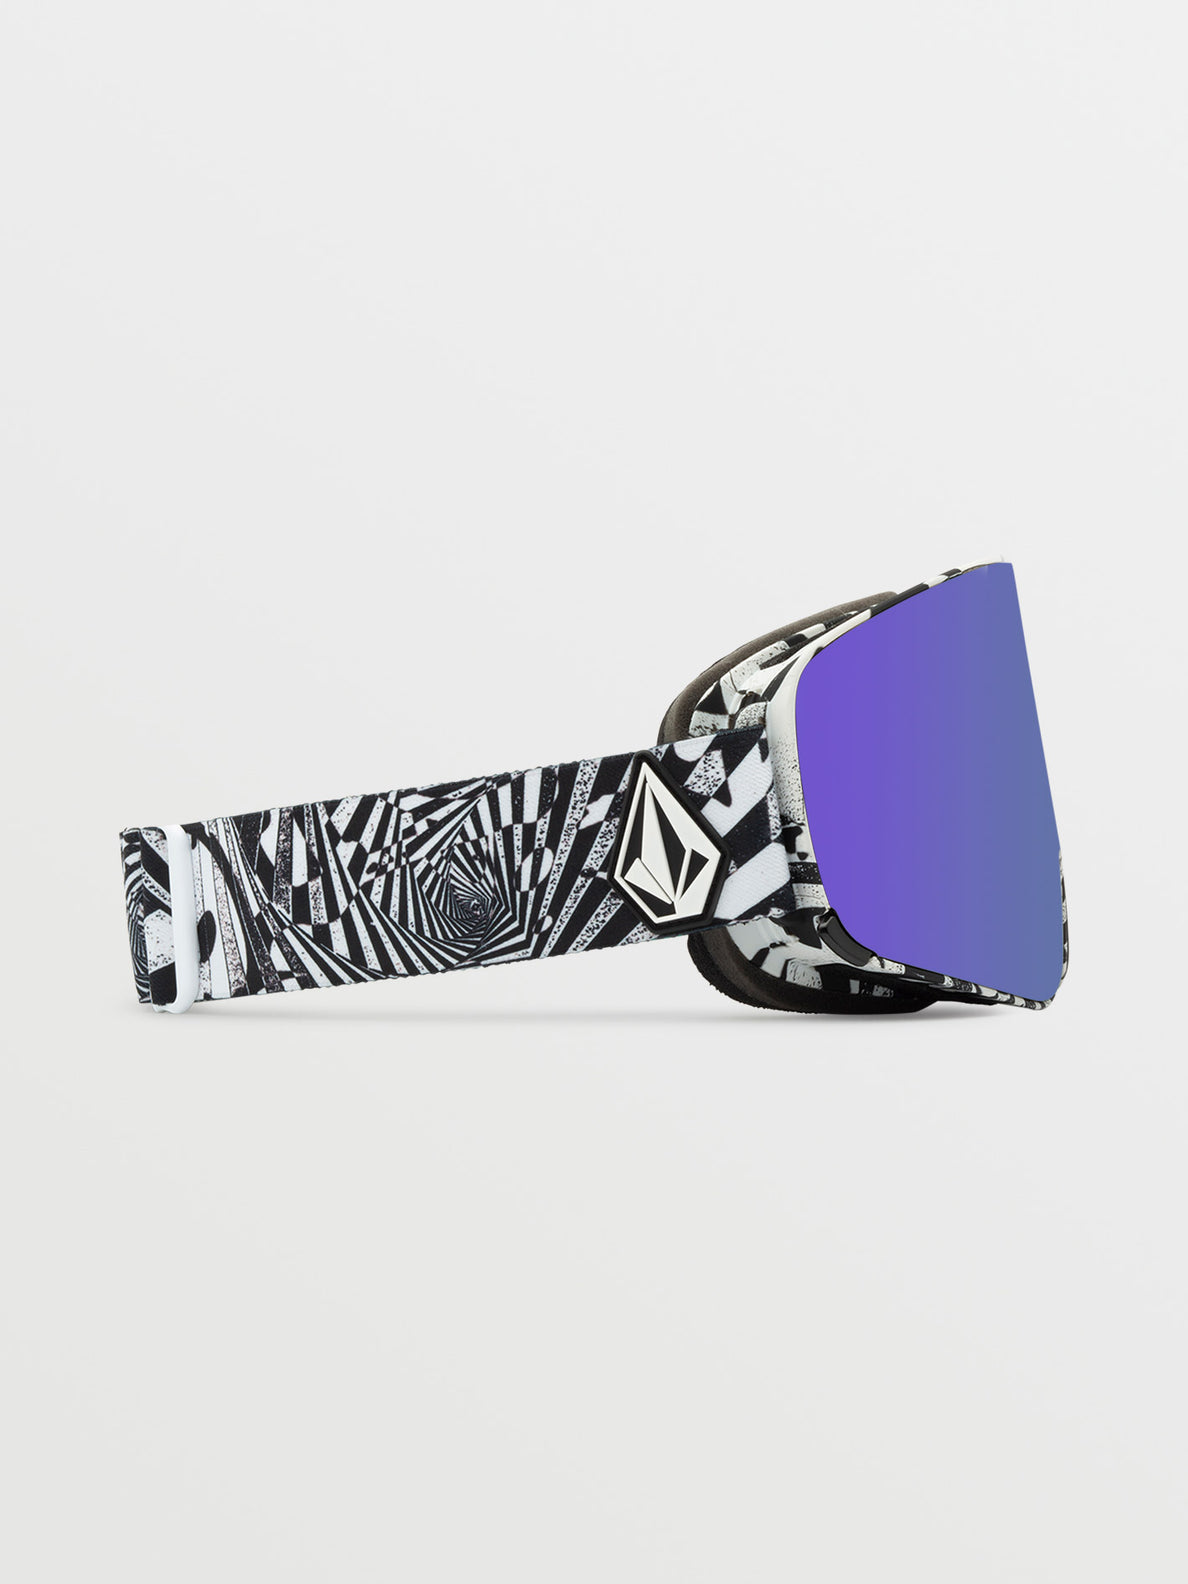 Odyssey Goggle - Op Art / Purple Chrome+BL